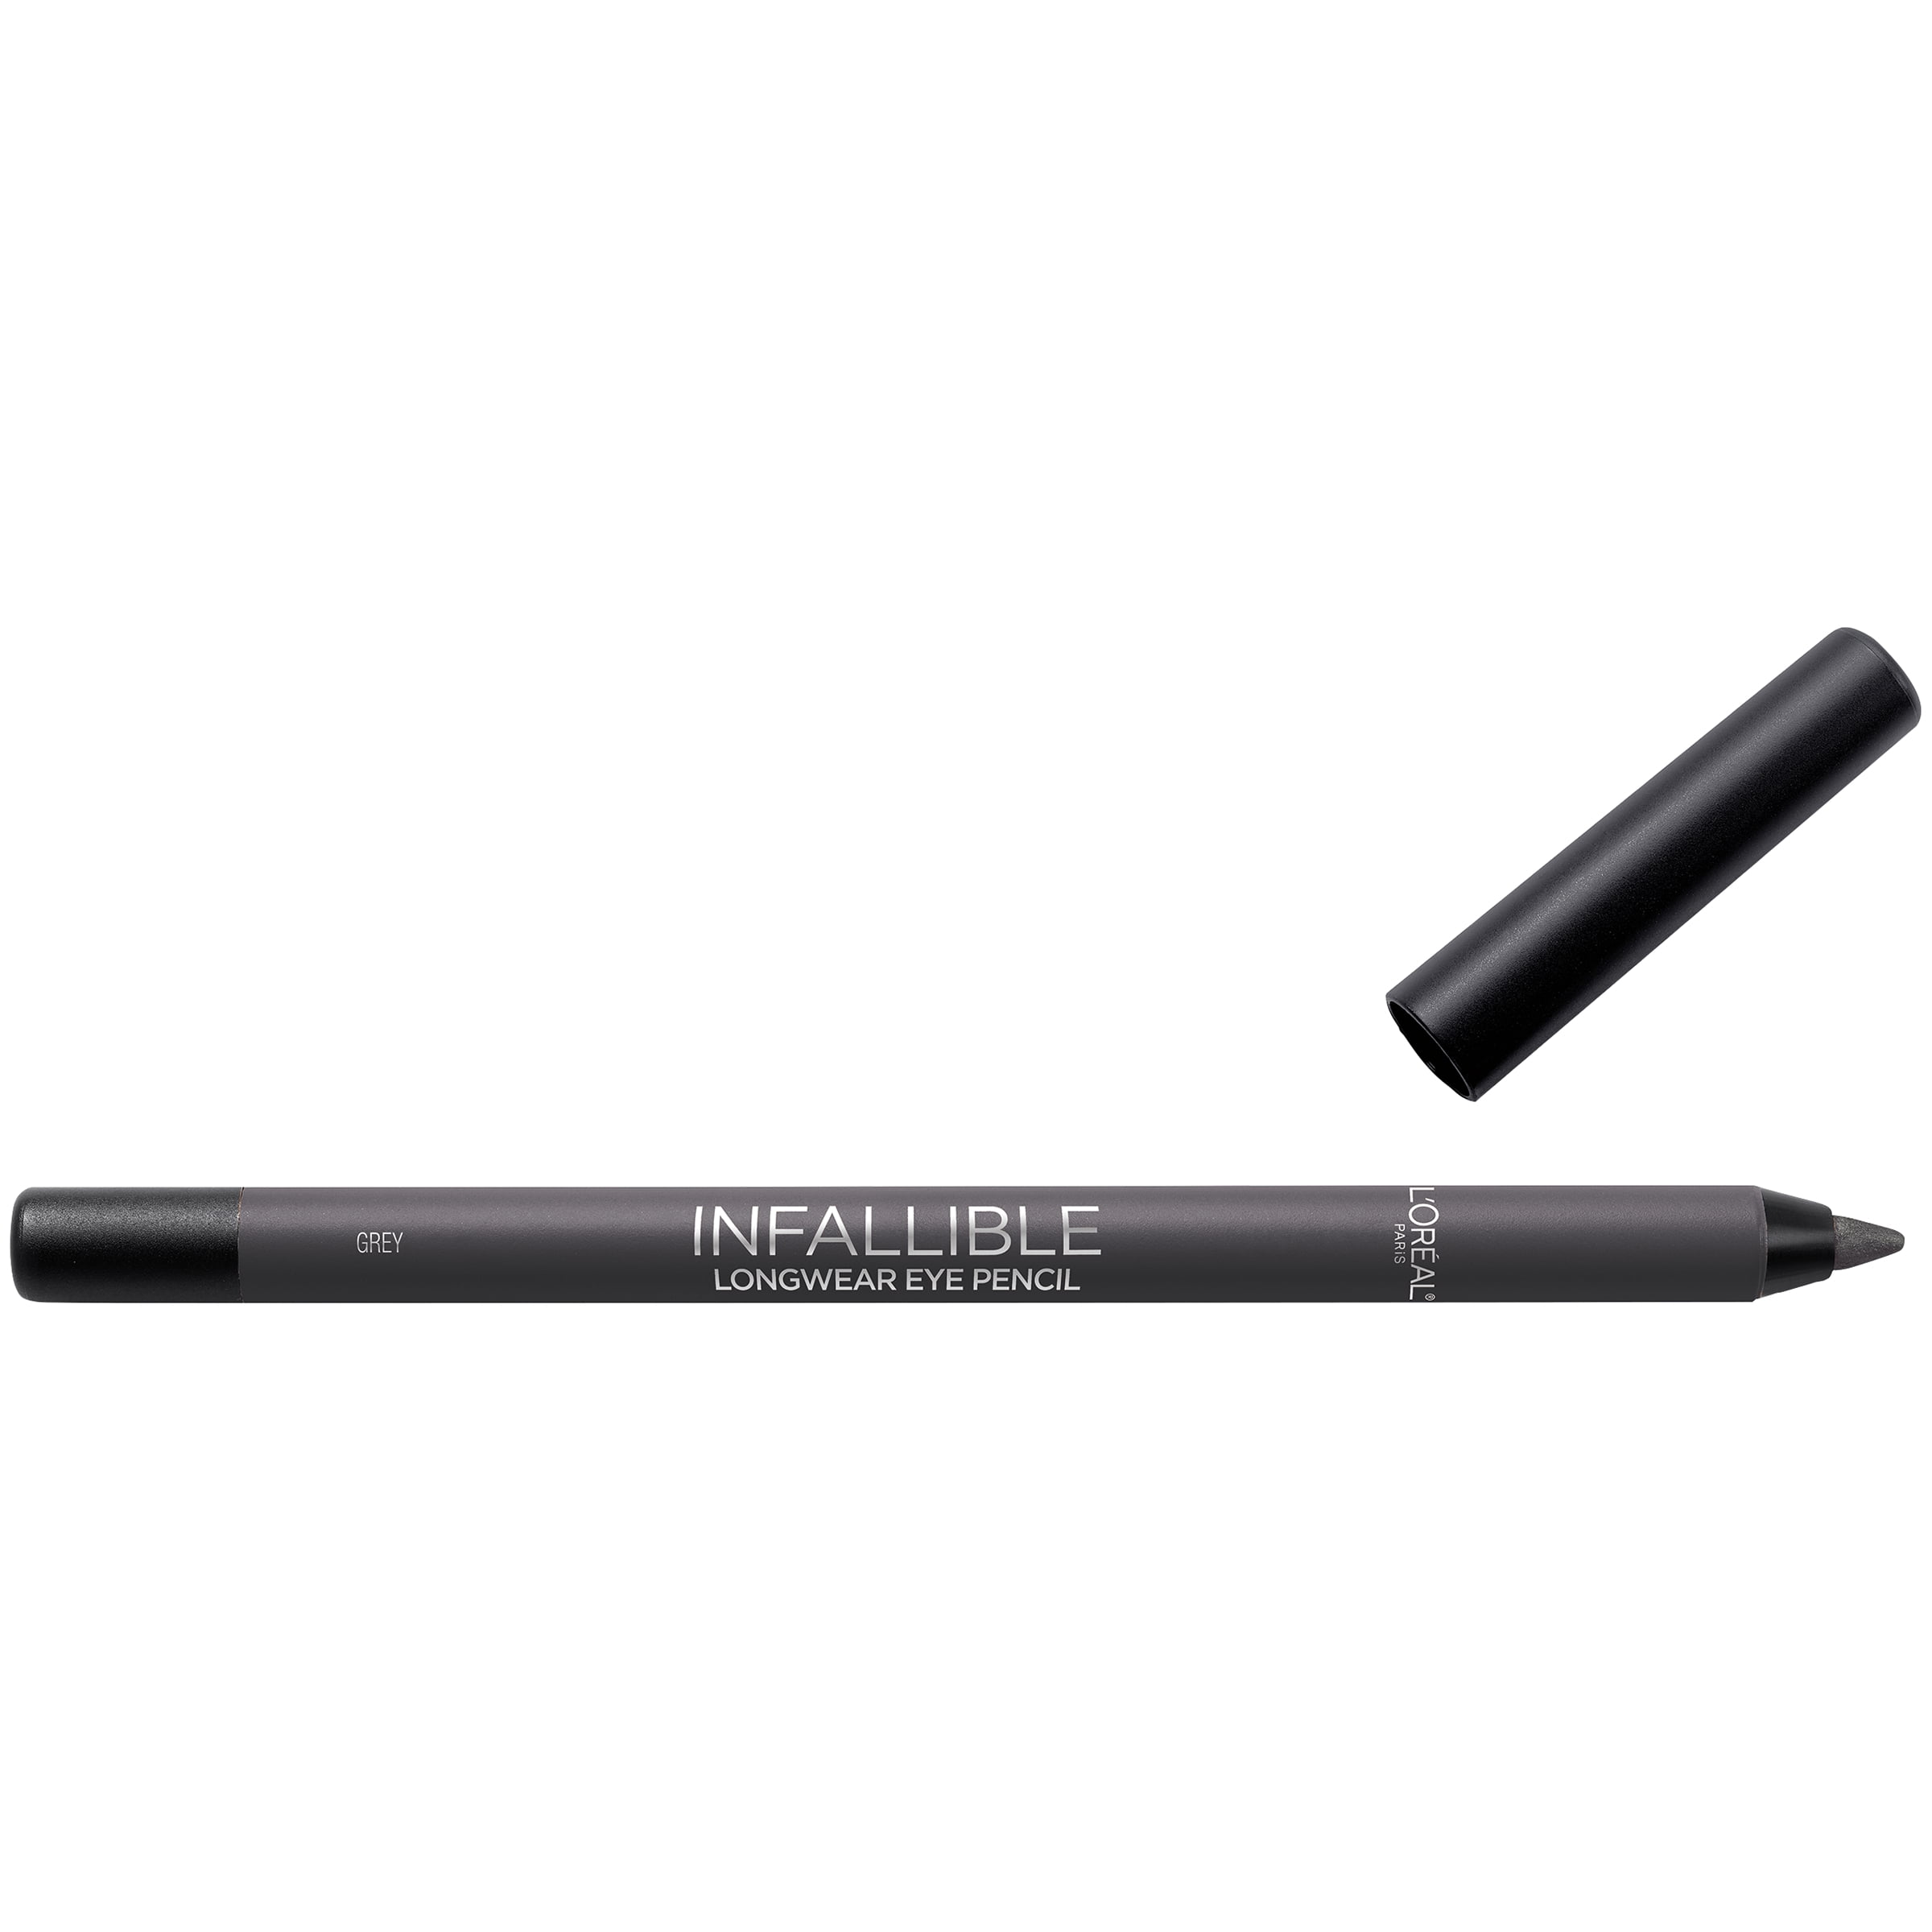 L'Oreal Paris Infallible Pro-Last Waterproof Pencil Eyeliner, Grey